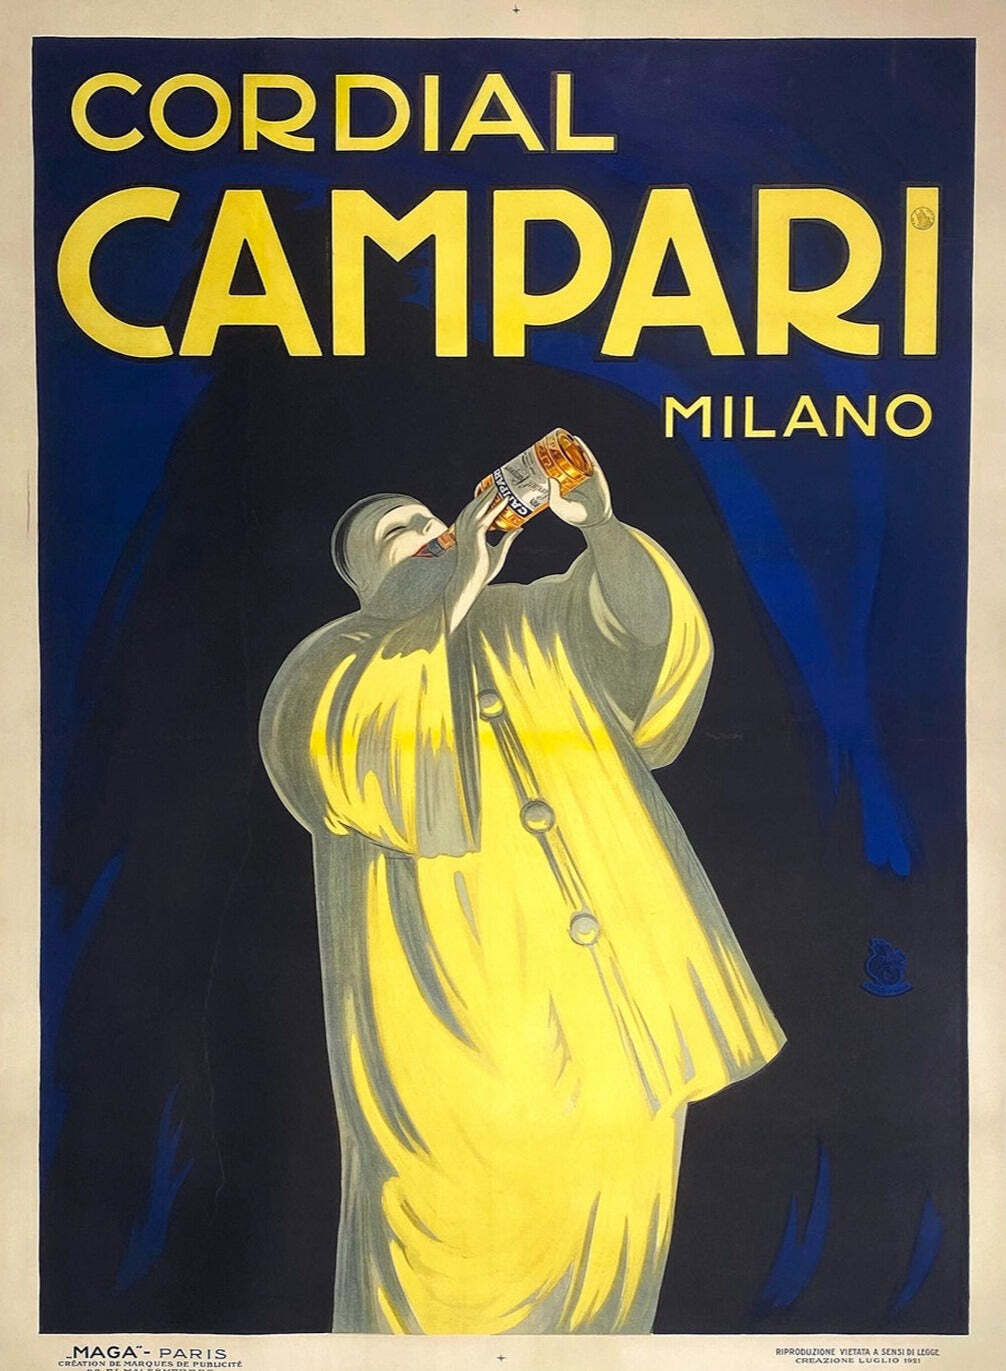 Campari - Cordial Campari Milano Original Vintage Poster